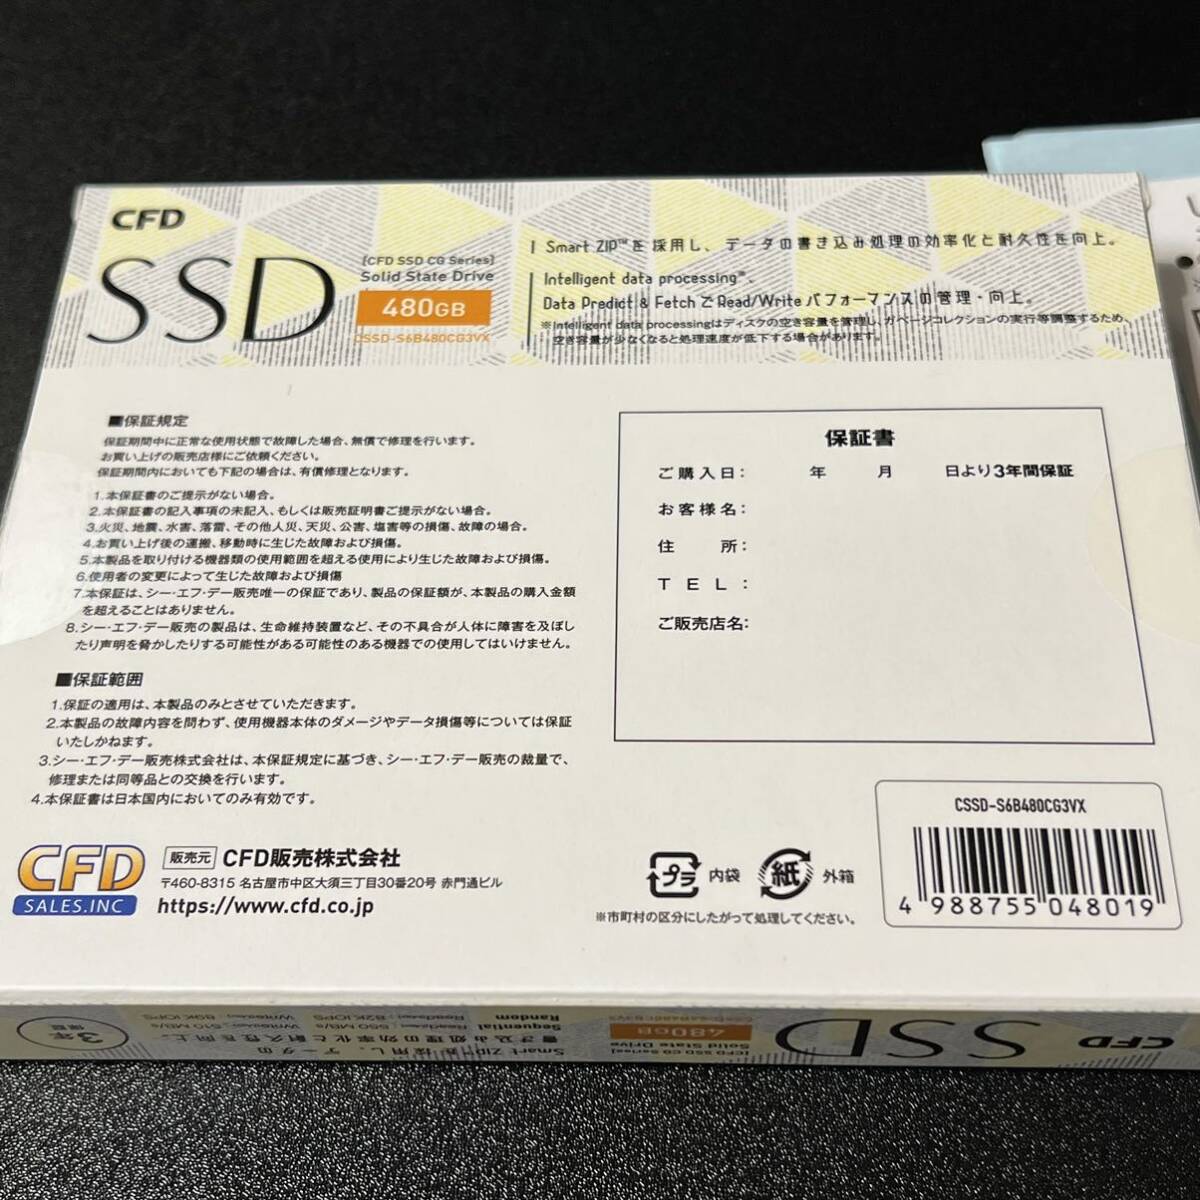 CFD SSD 480GB CSSD-S6B480CG3VX SATA 2.5 -inch free shipping 